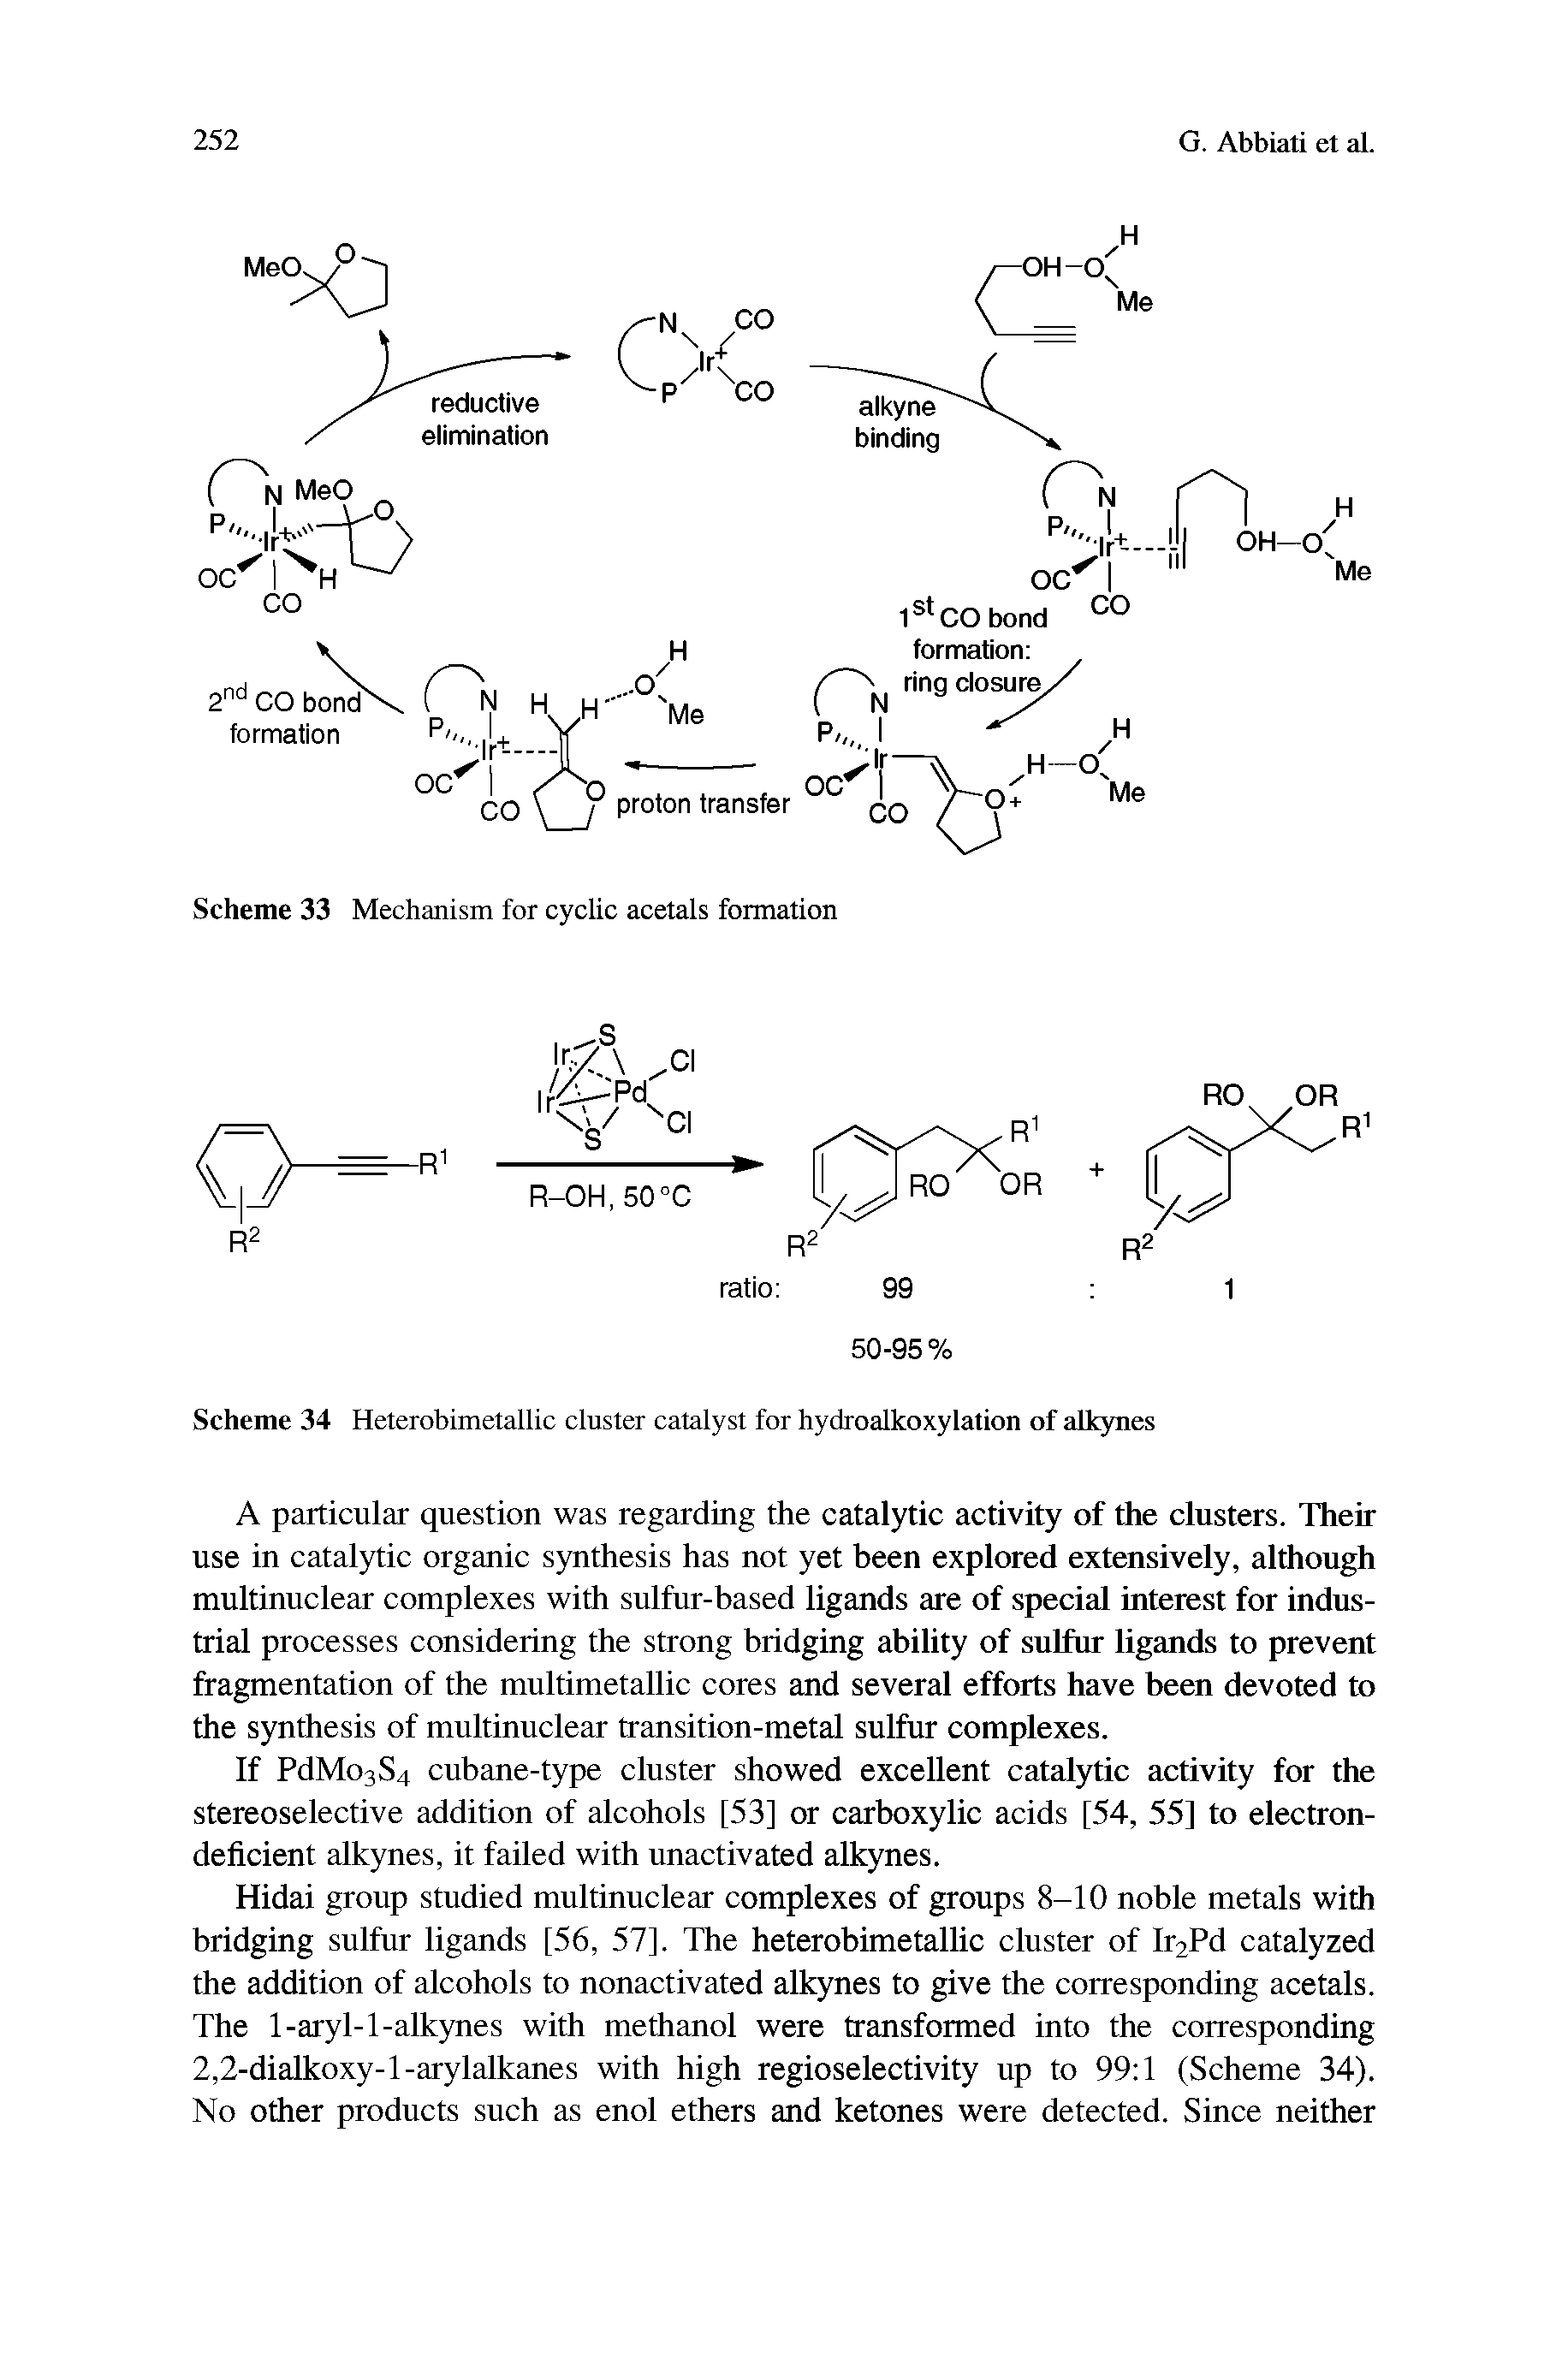 Scheme 34 Heterobimetallic cluster catalyst for hydroalkoxylation of alkynes...